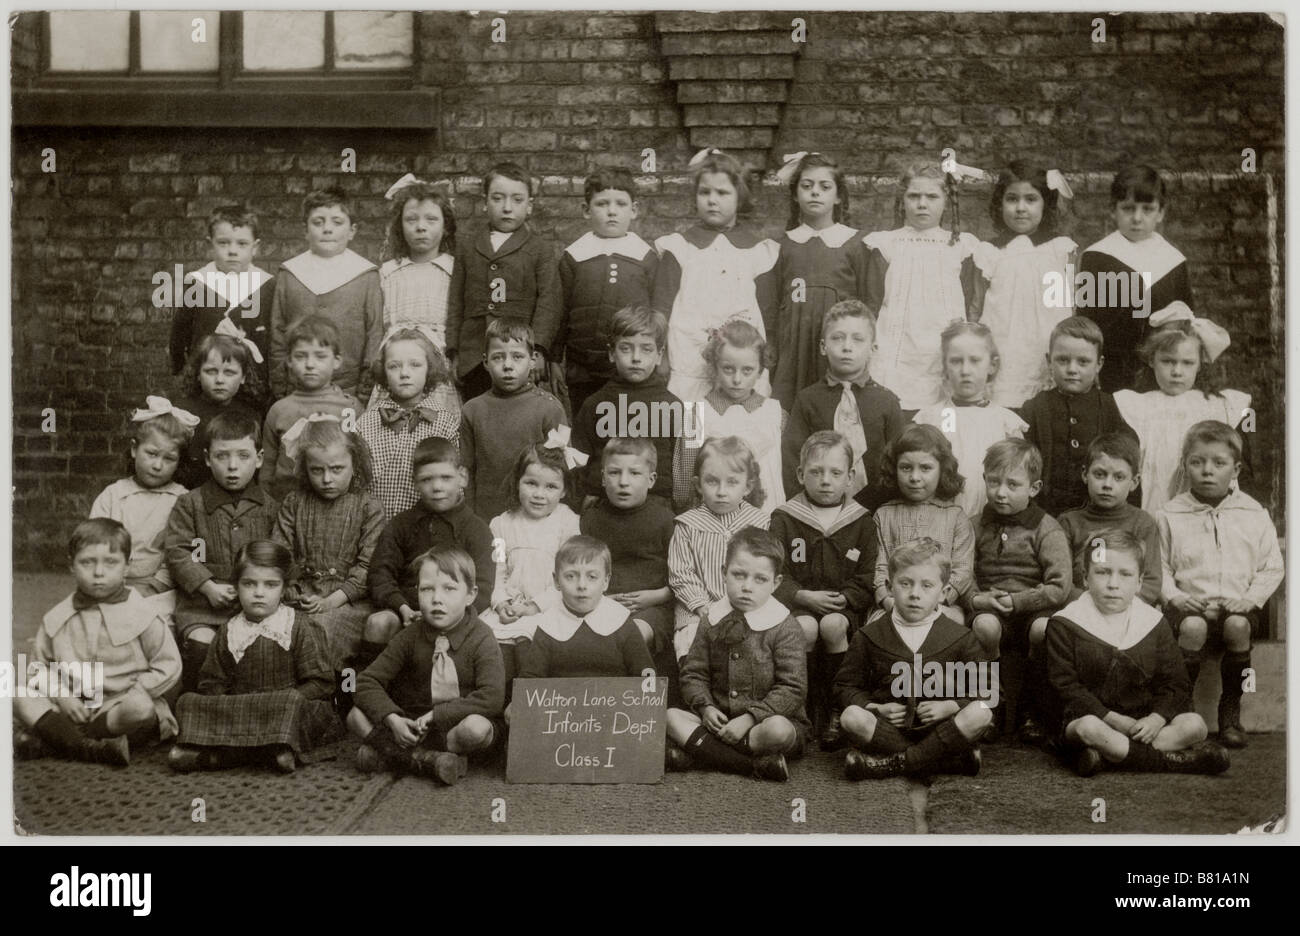 Original Edwardian primary school class photograph circa 1910 - Walton Lane School (U.K.) - Infants Department Class 1, Edwardians Stock Photo